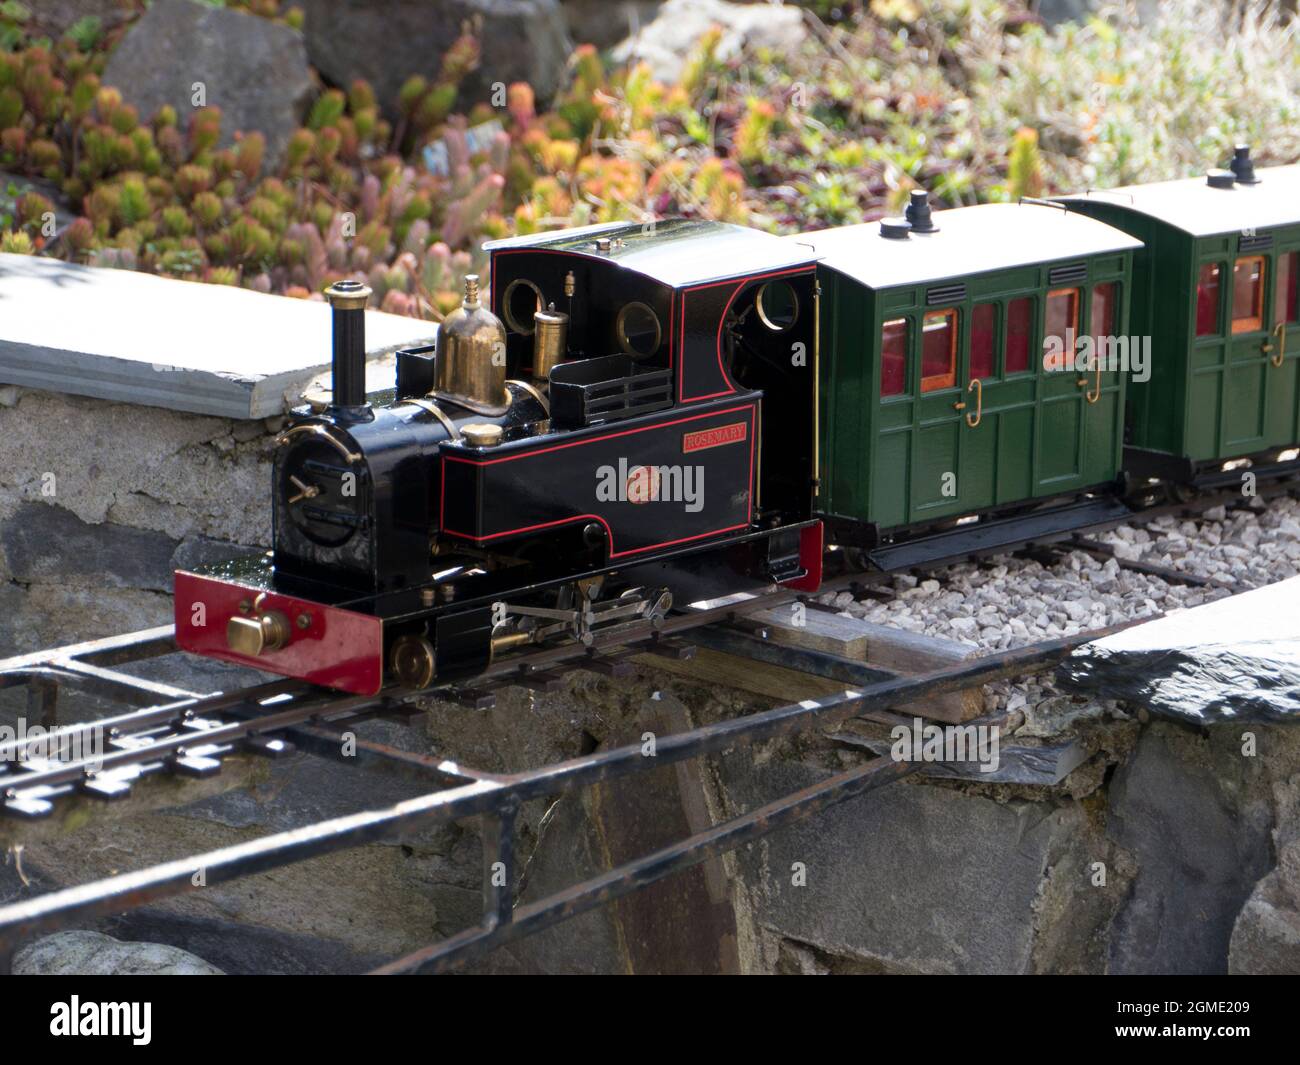 Garden Model Railway locomotive with carriages Stock Photo